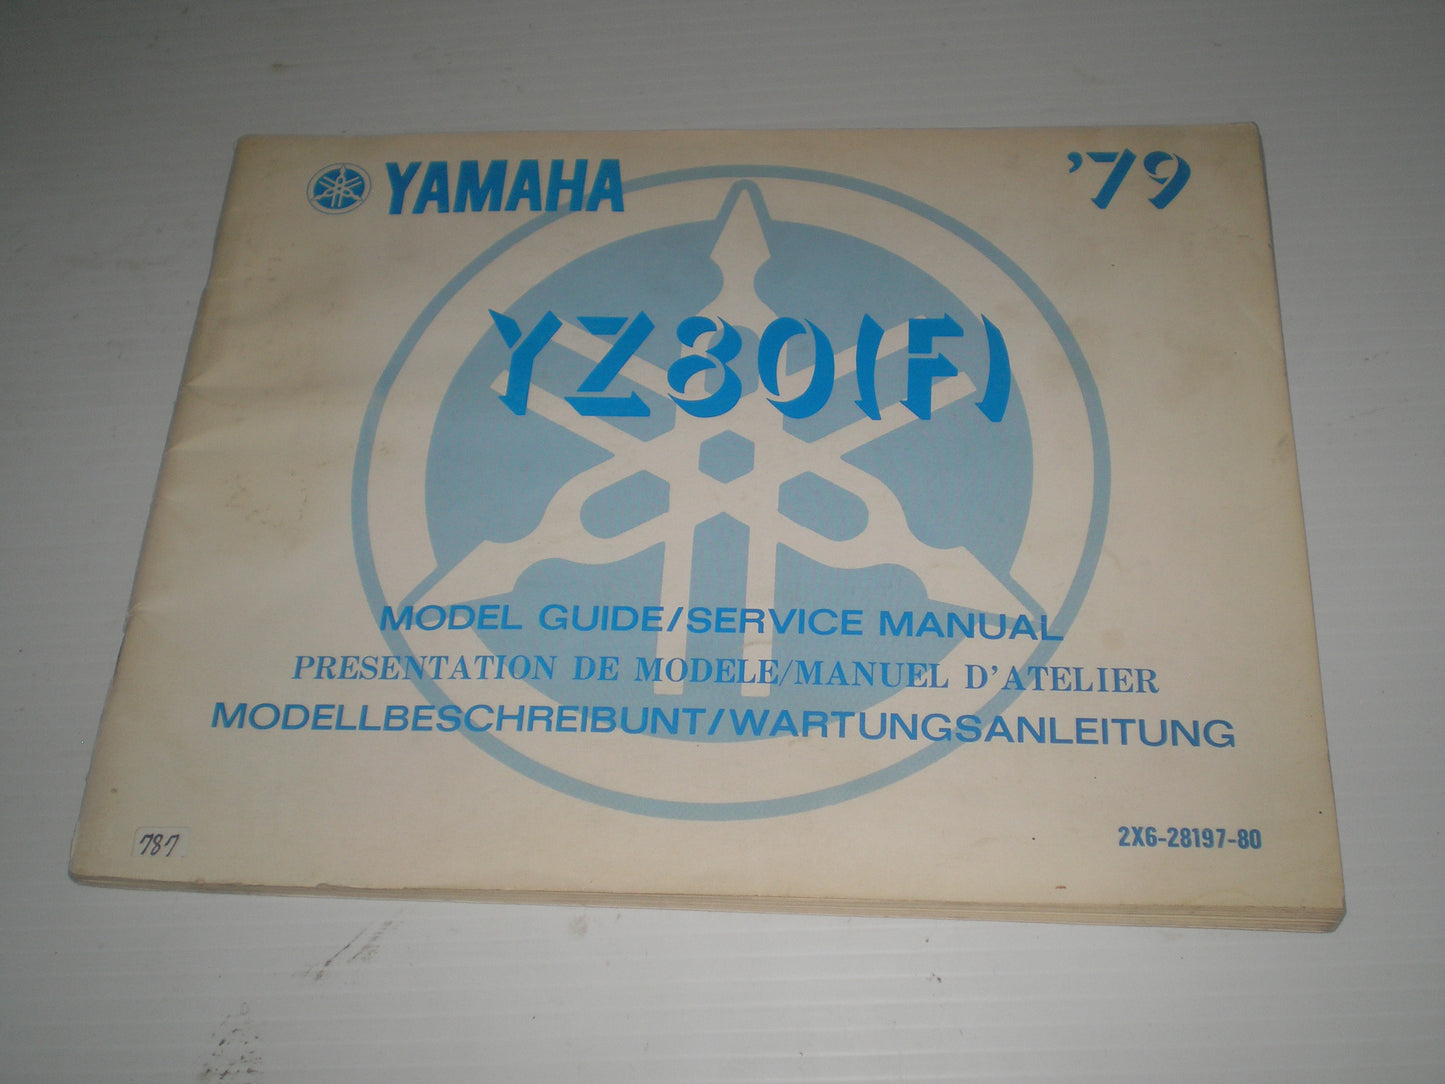 YAMAHA YZ80F  YZ80 F 1979  Model Guide Service Manual  2X6-28197-80  #787